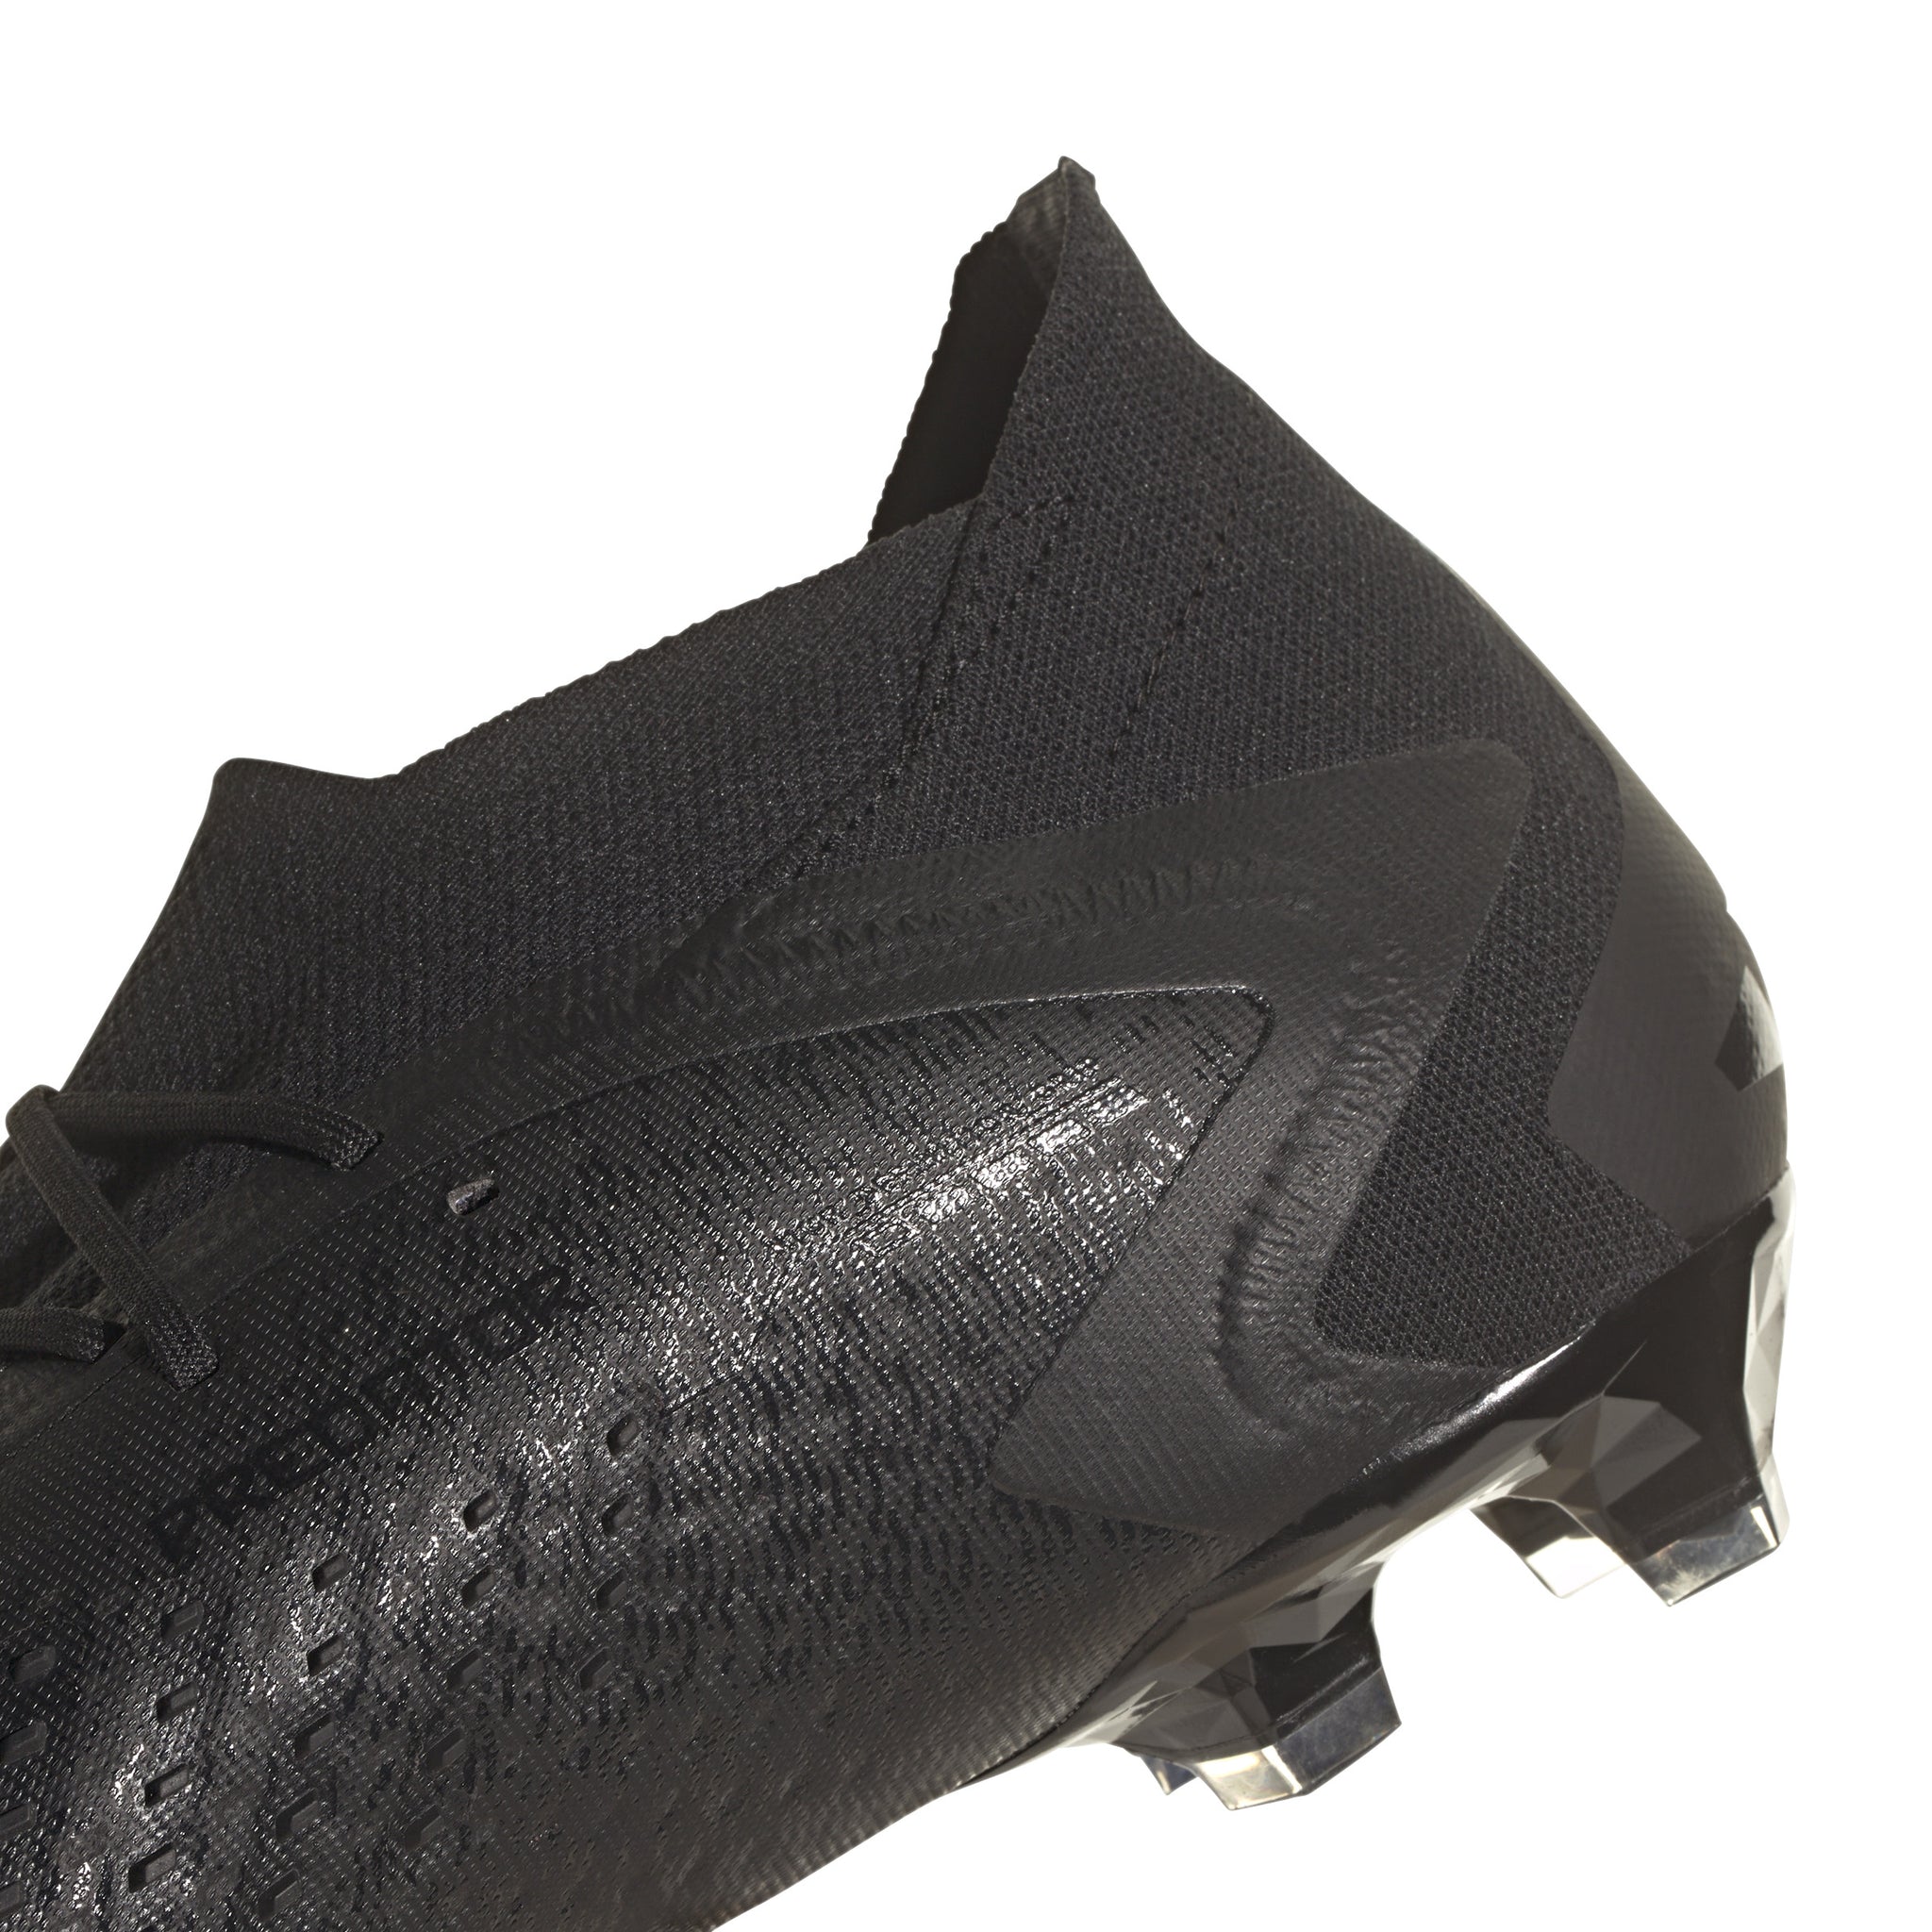 Adidas Predator Accuracy.1 FG Firm Ground Soccer Cleats Black / 9.5